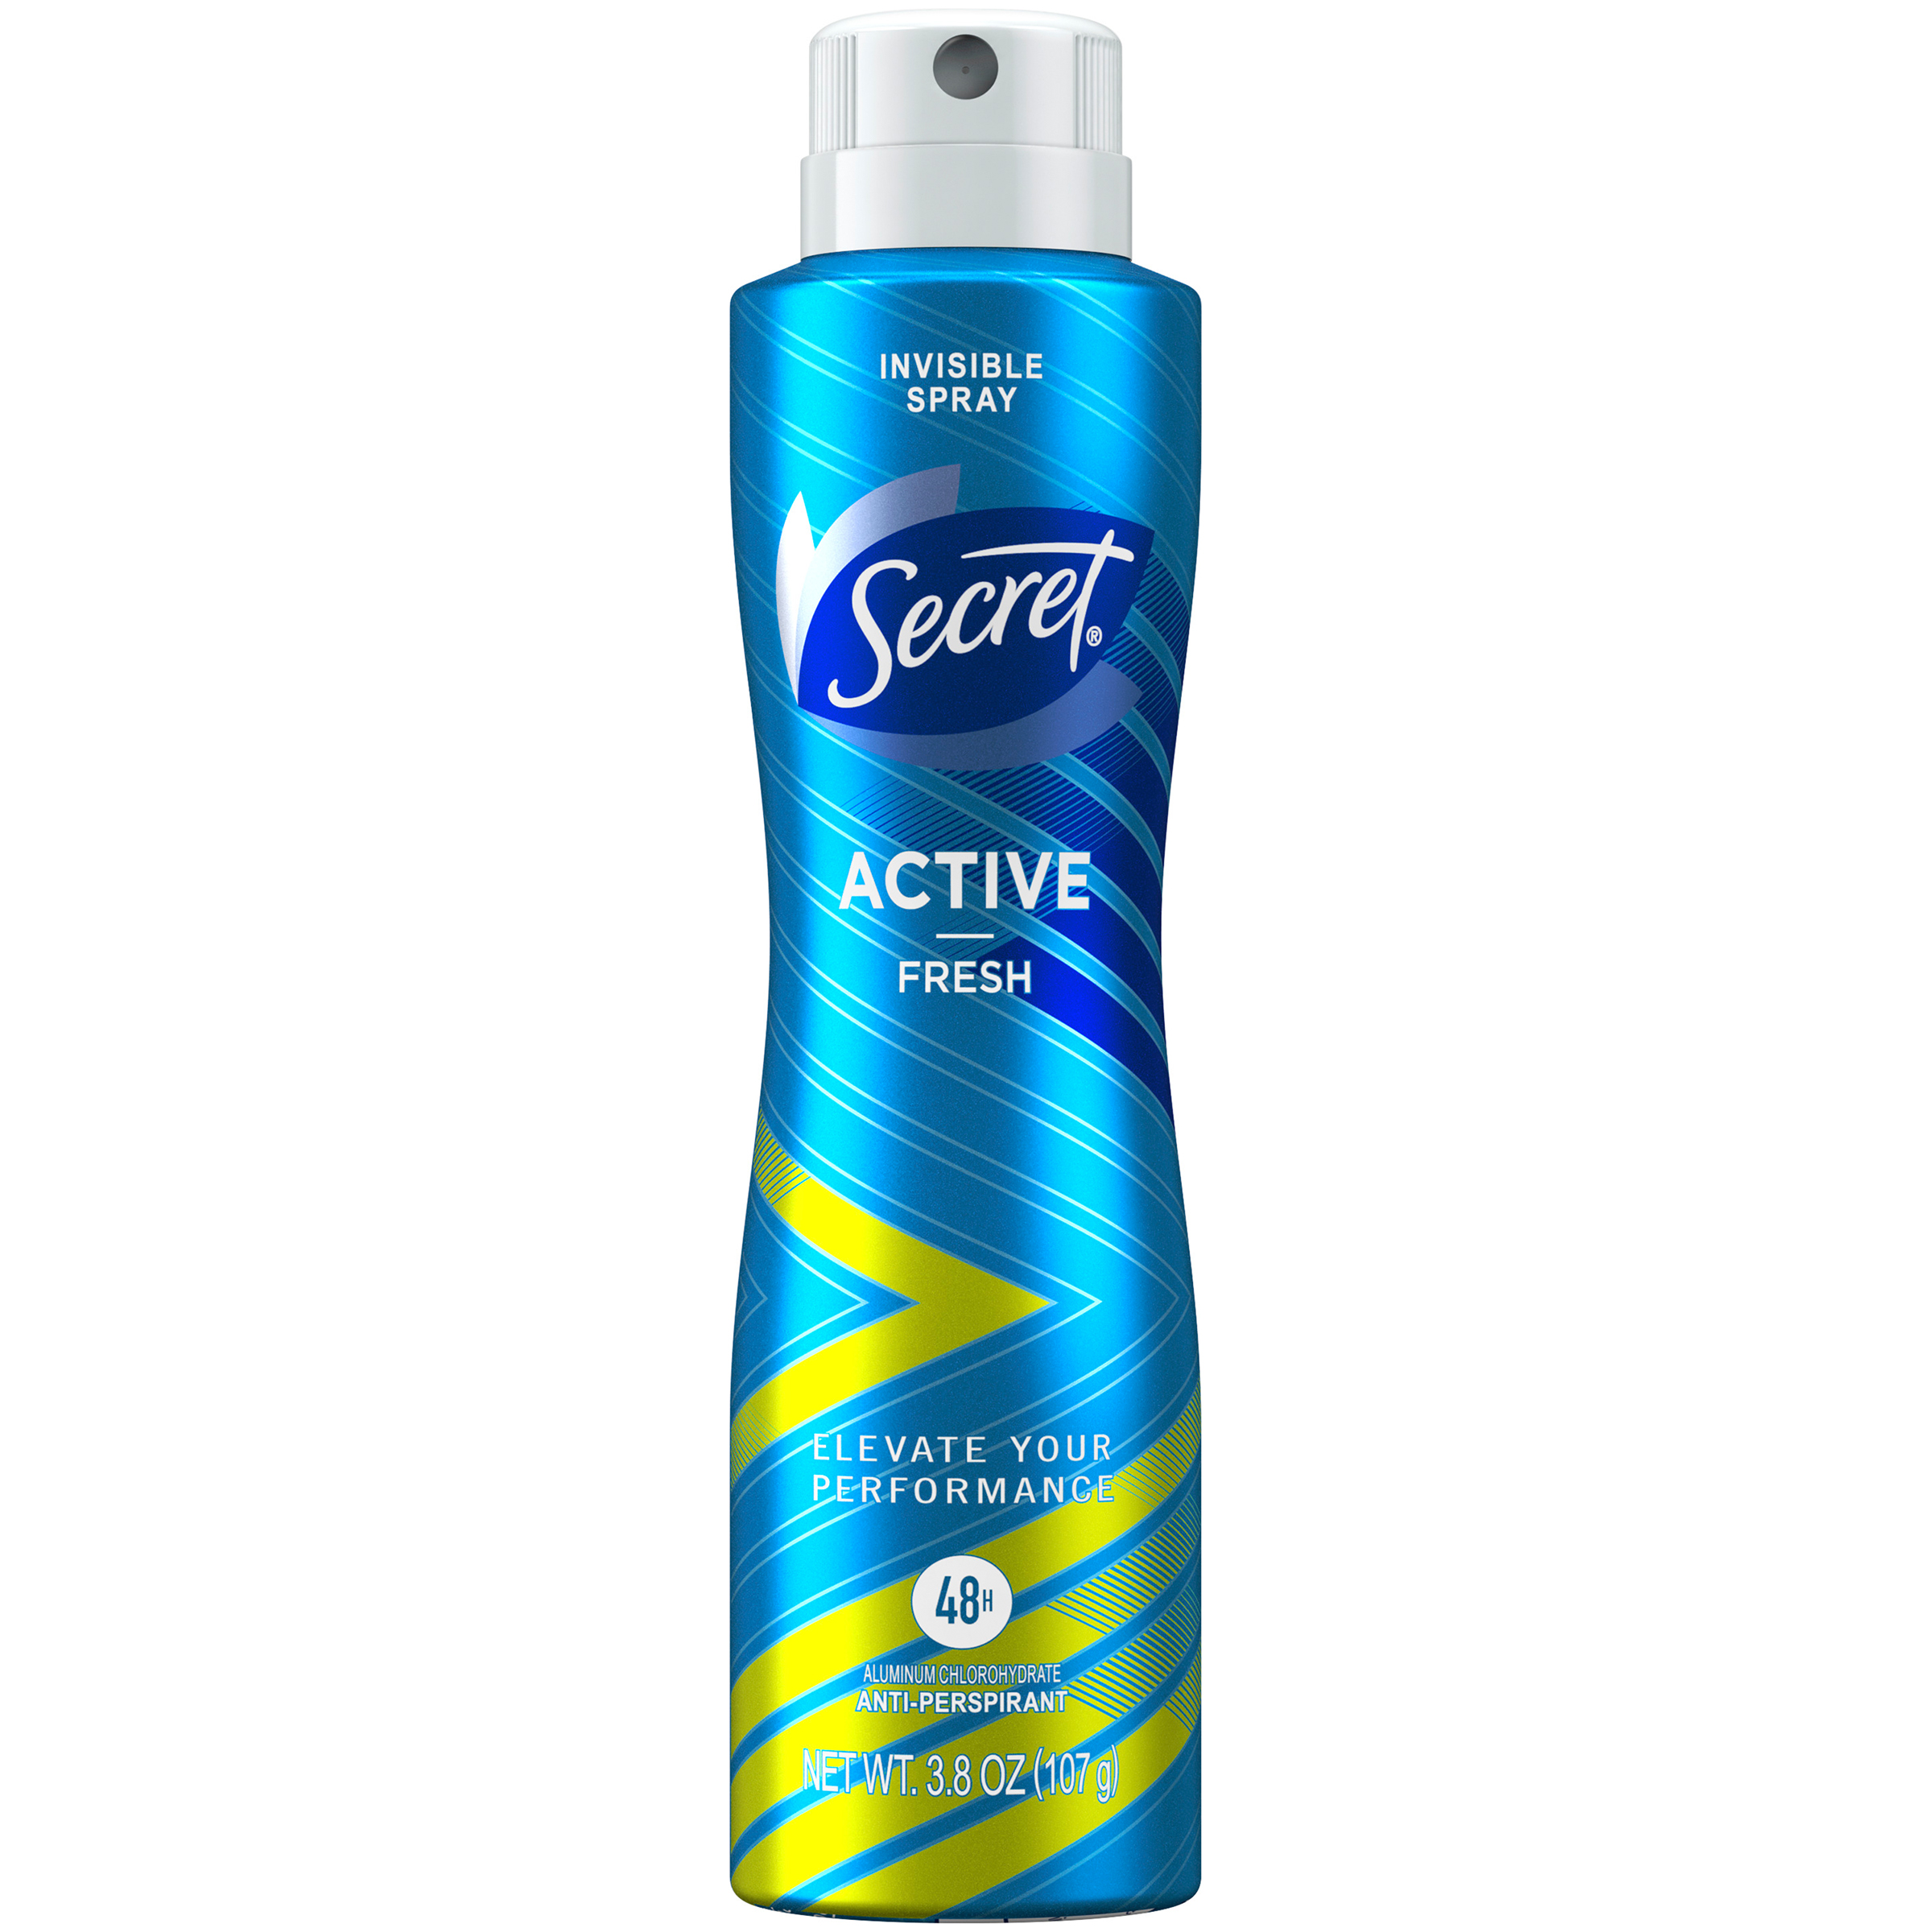 Secret  Invisible Spray Antiperspirant and Deodorant for Women, Active Fresh, 3.8 oz